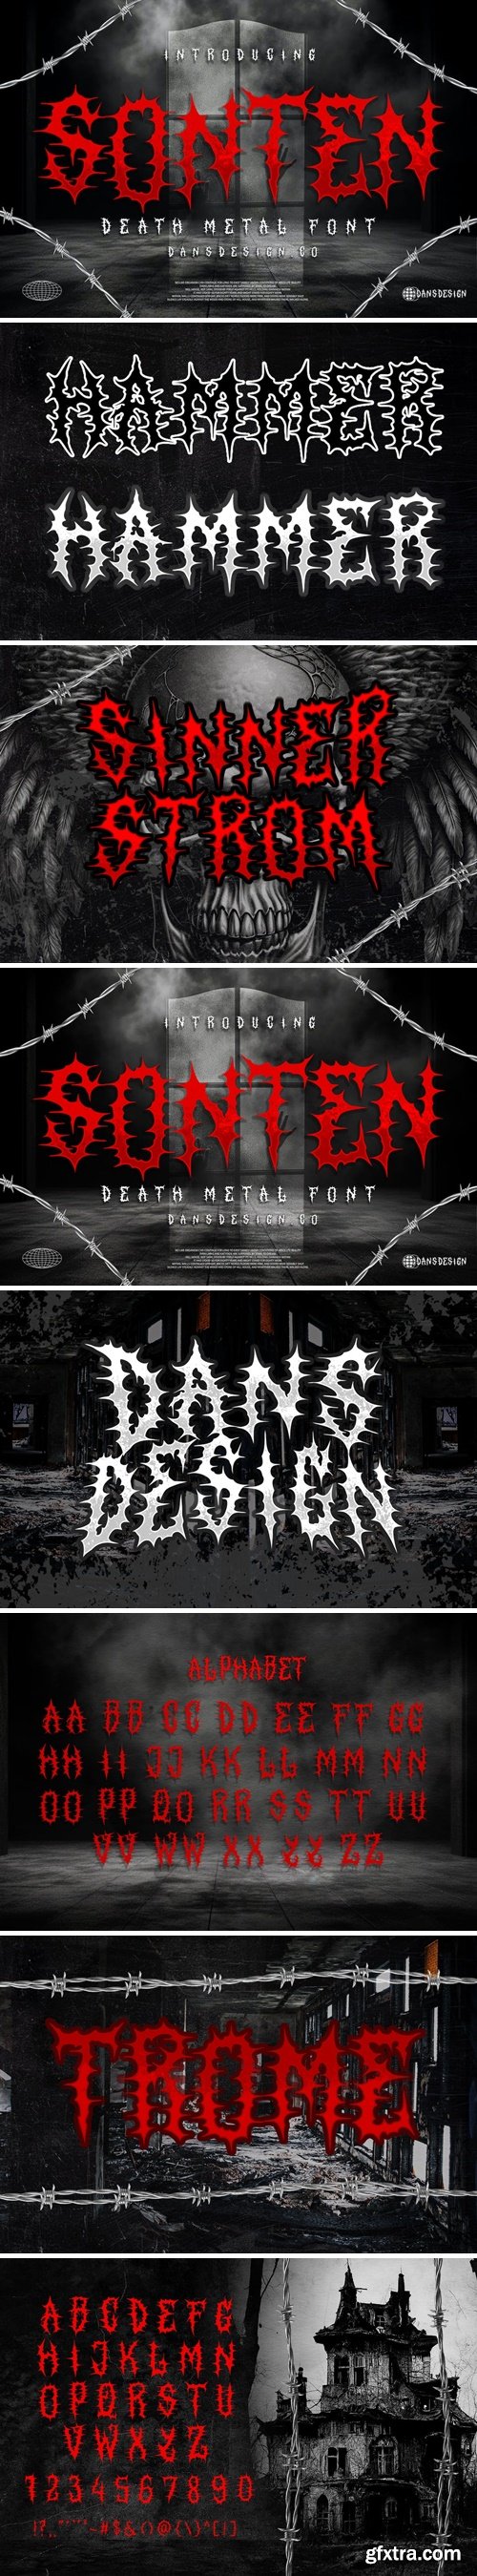 SONTEN Modern Blackletter Metal Horror Font